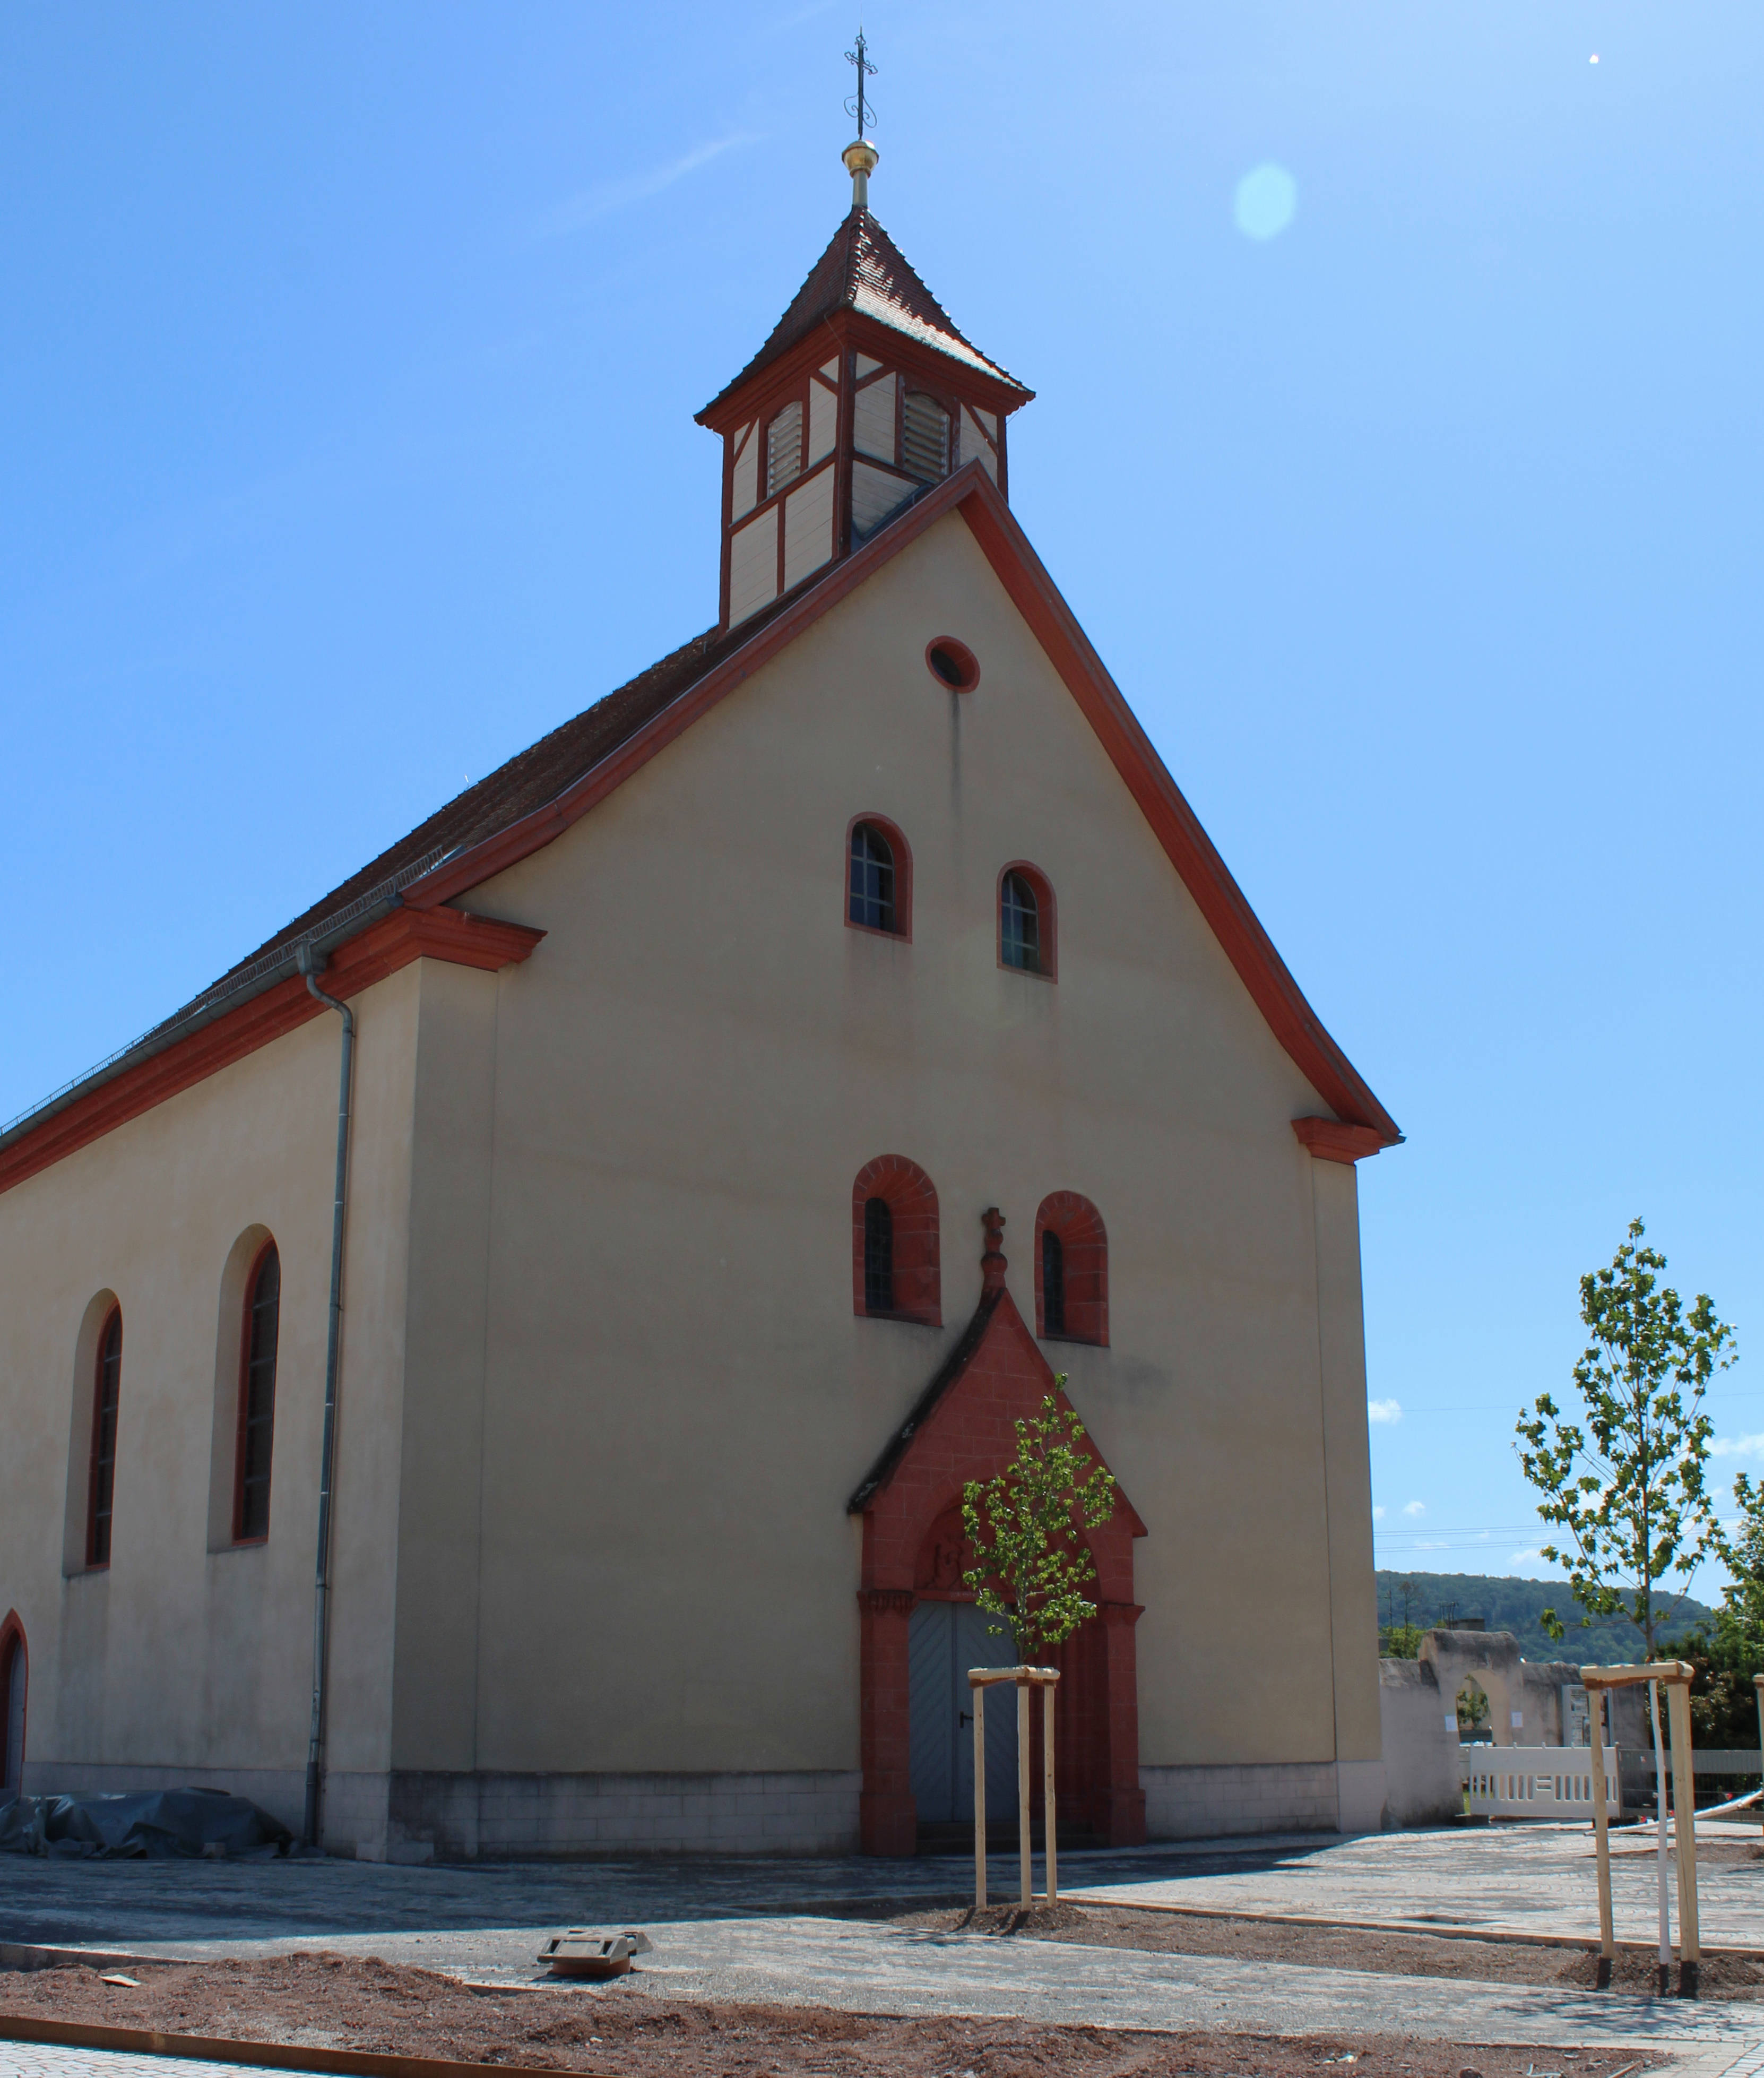  Die Aegidiuskirche im Ortskern Leimen-St. Ilgens 